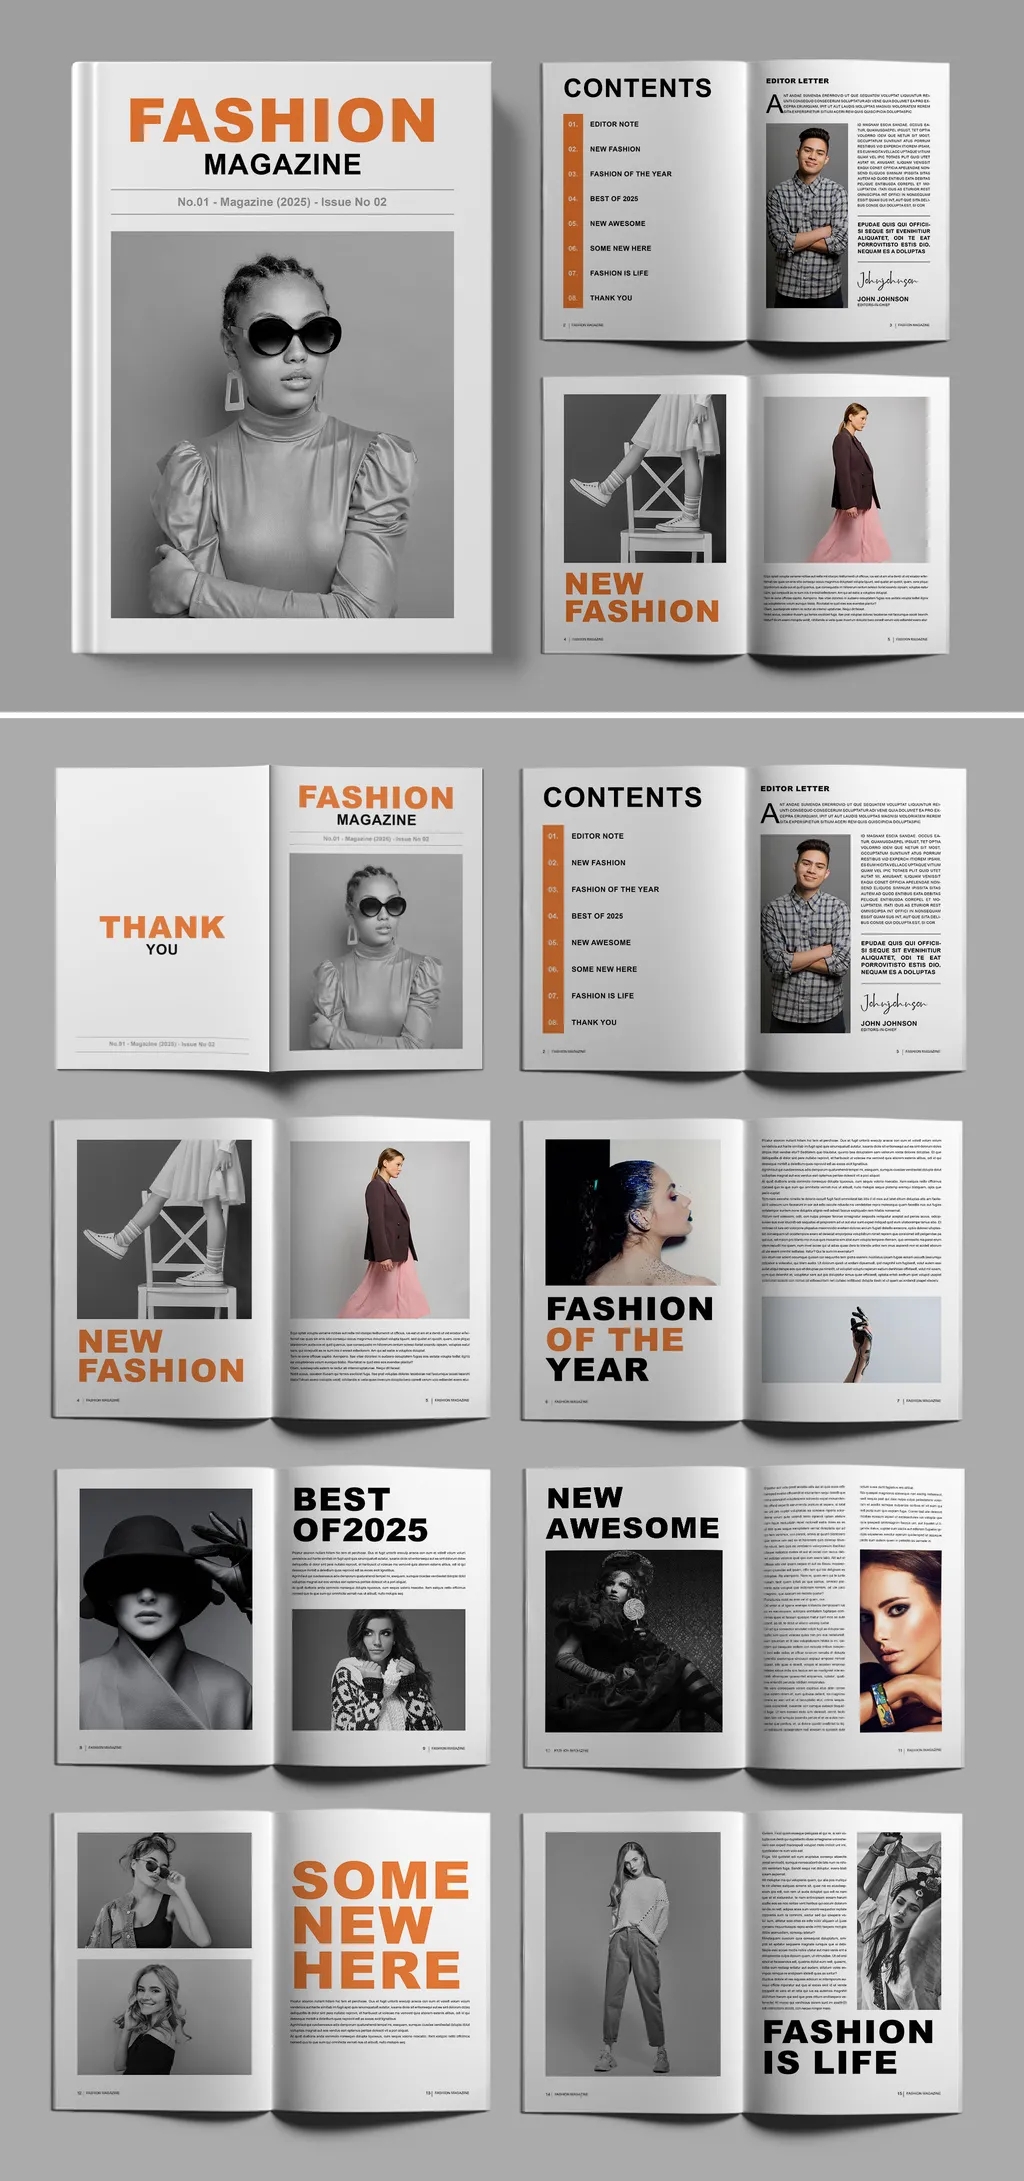 Adobestock - Fashion Magazine Template 718545708